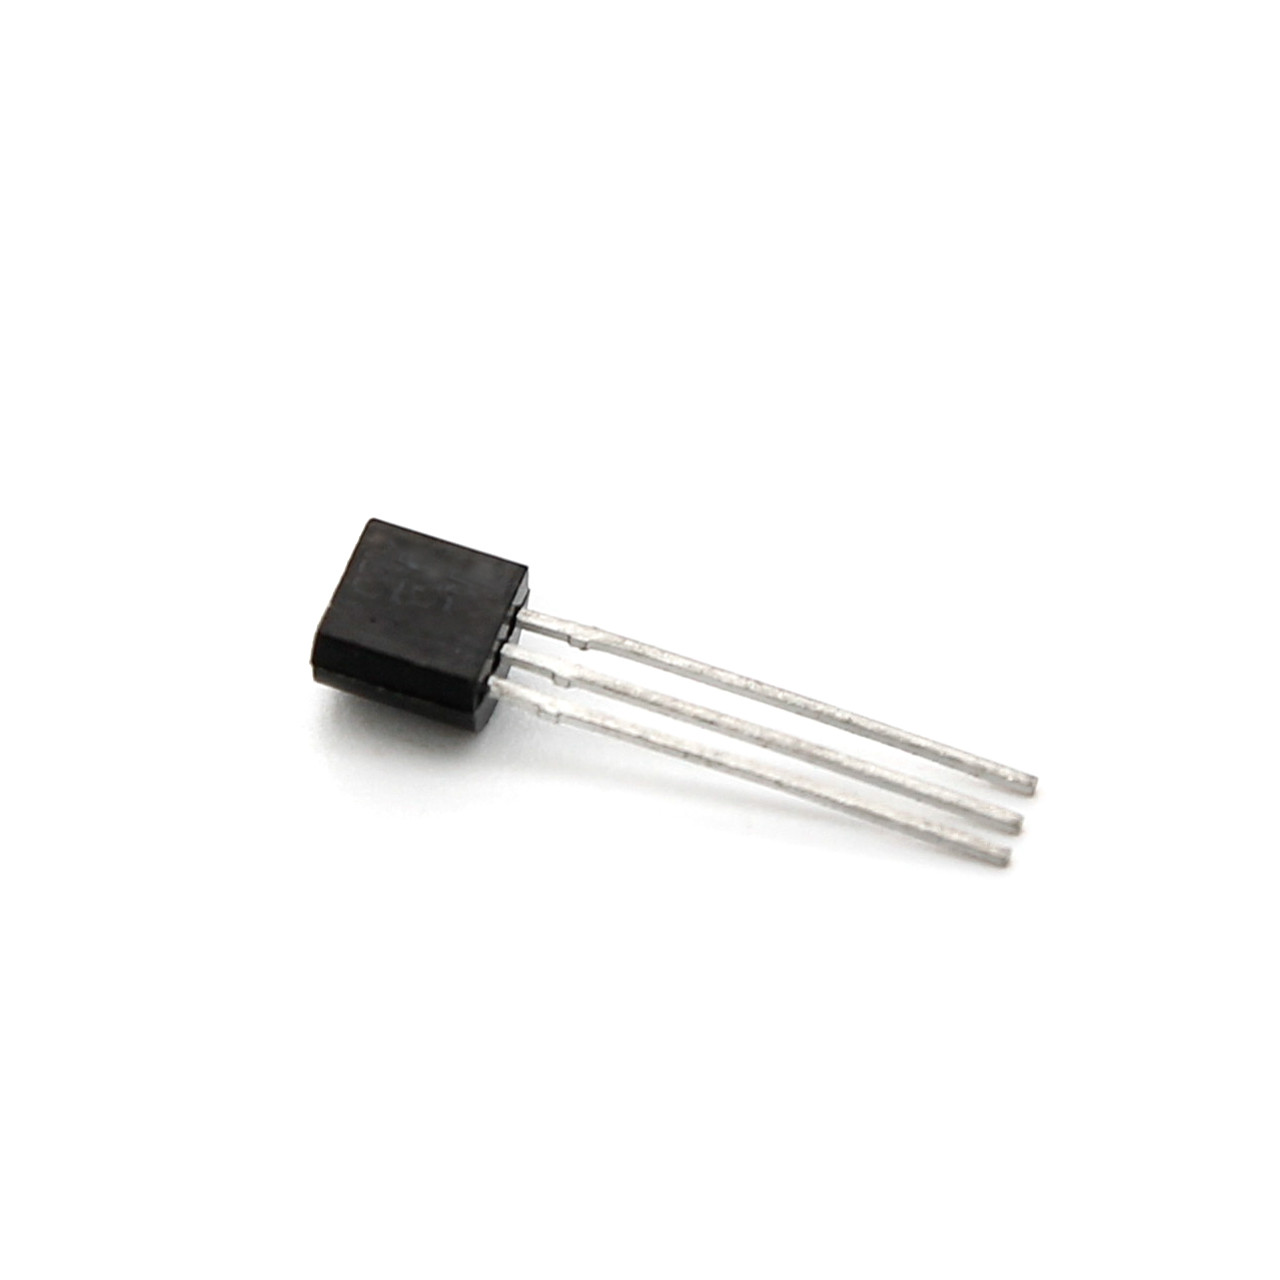 2N7000 - MOSFET Transistor